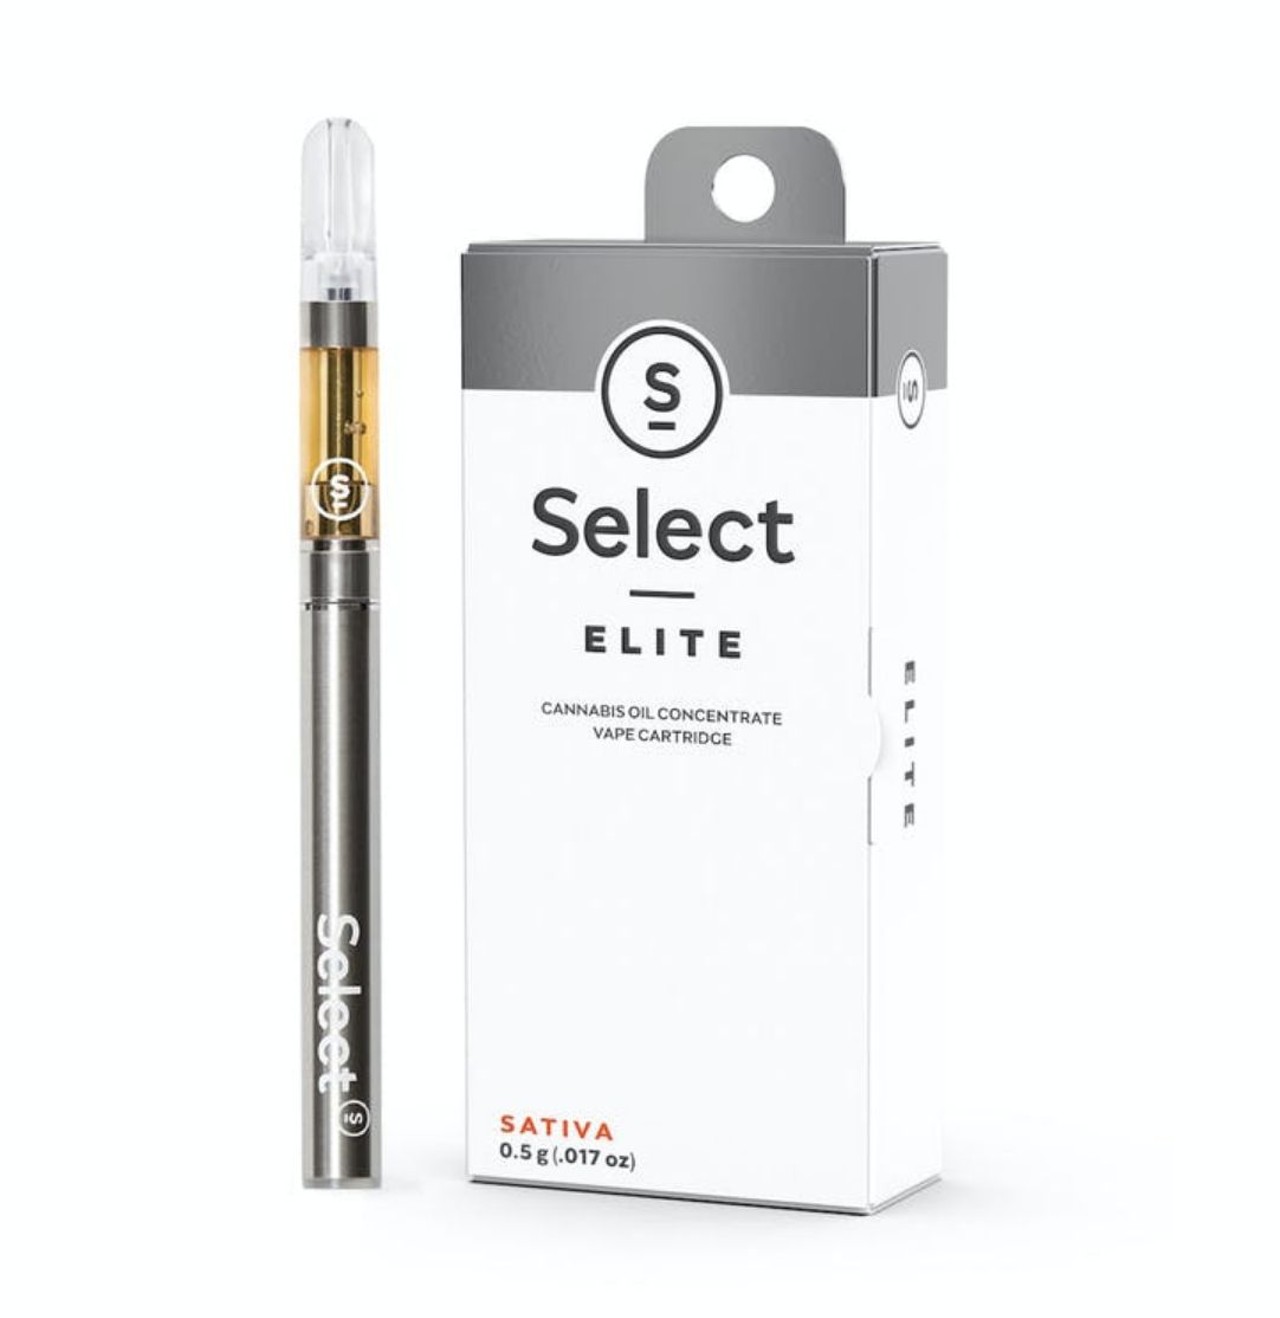 Best Marijuana Cartridge
Select Elite Live
selectcannabis.com
Photo via Five and Dime/Weedmaps